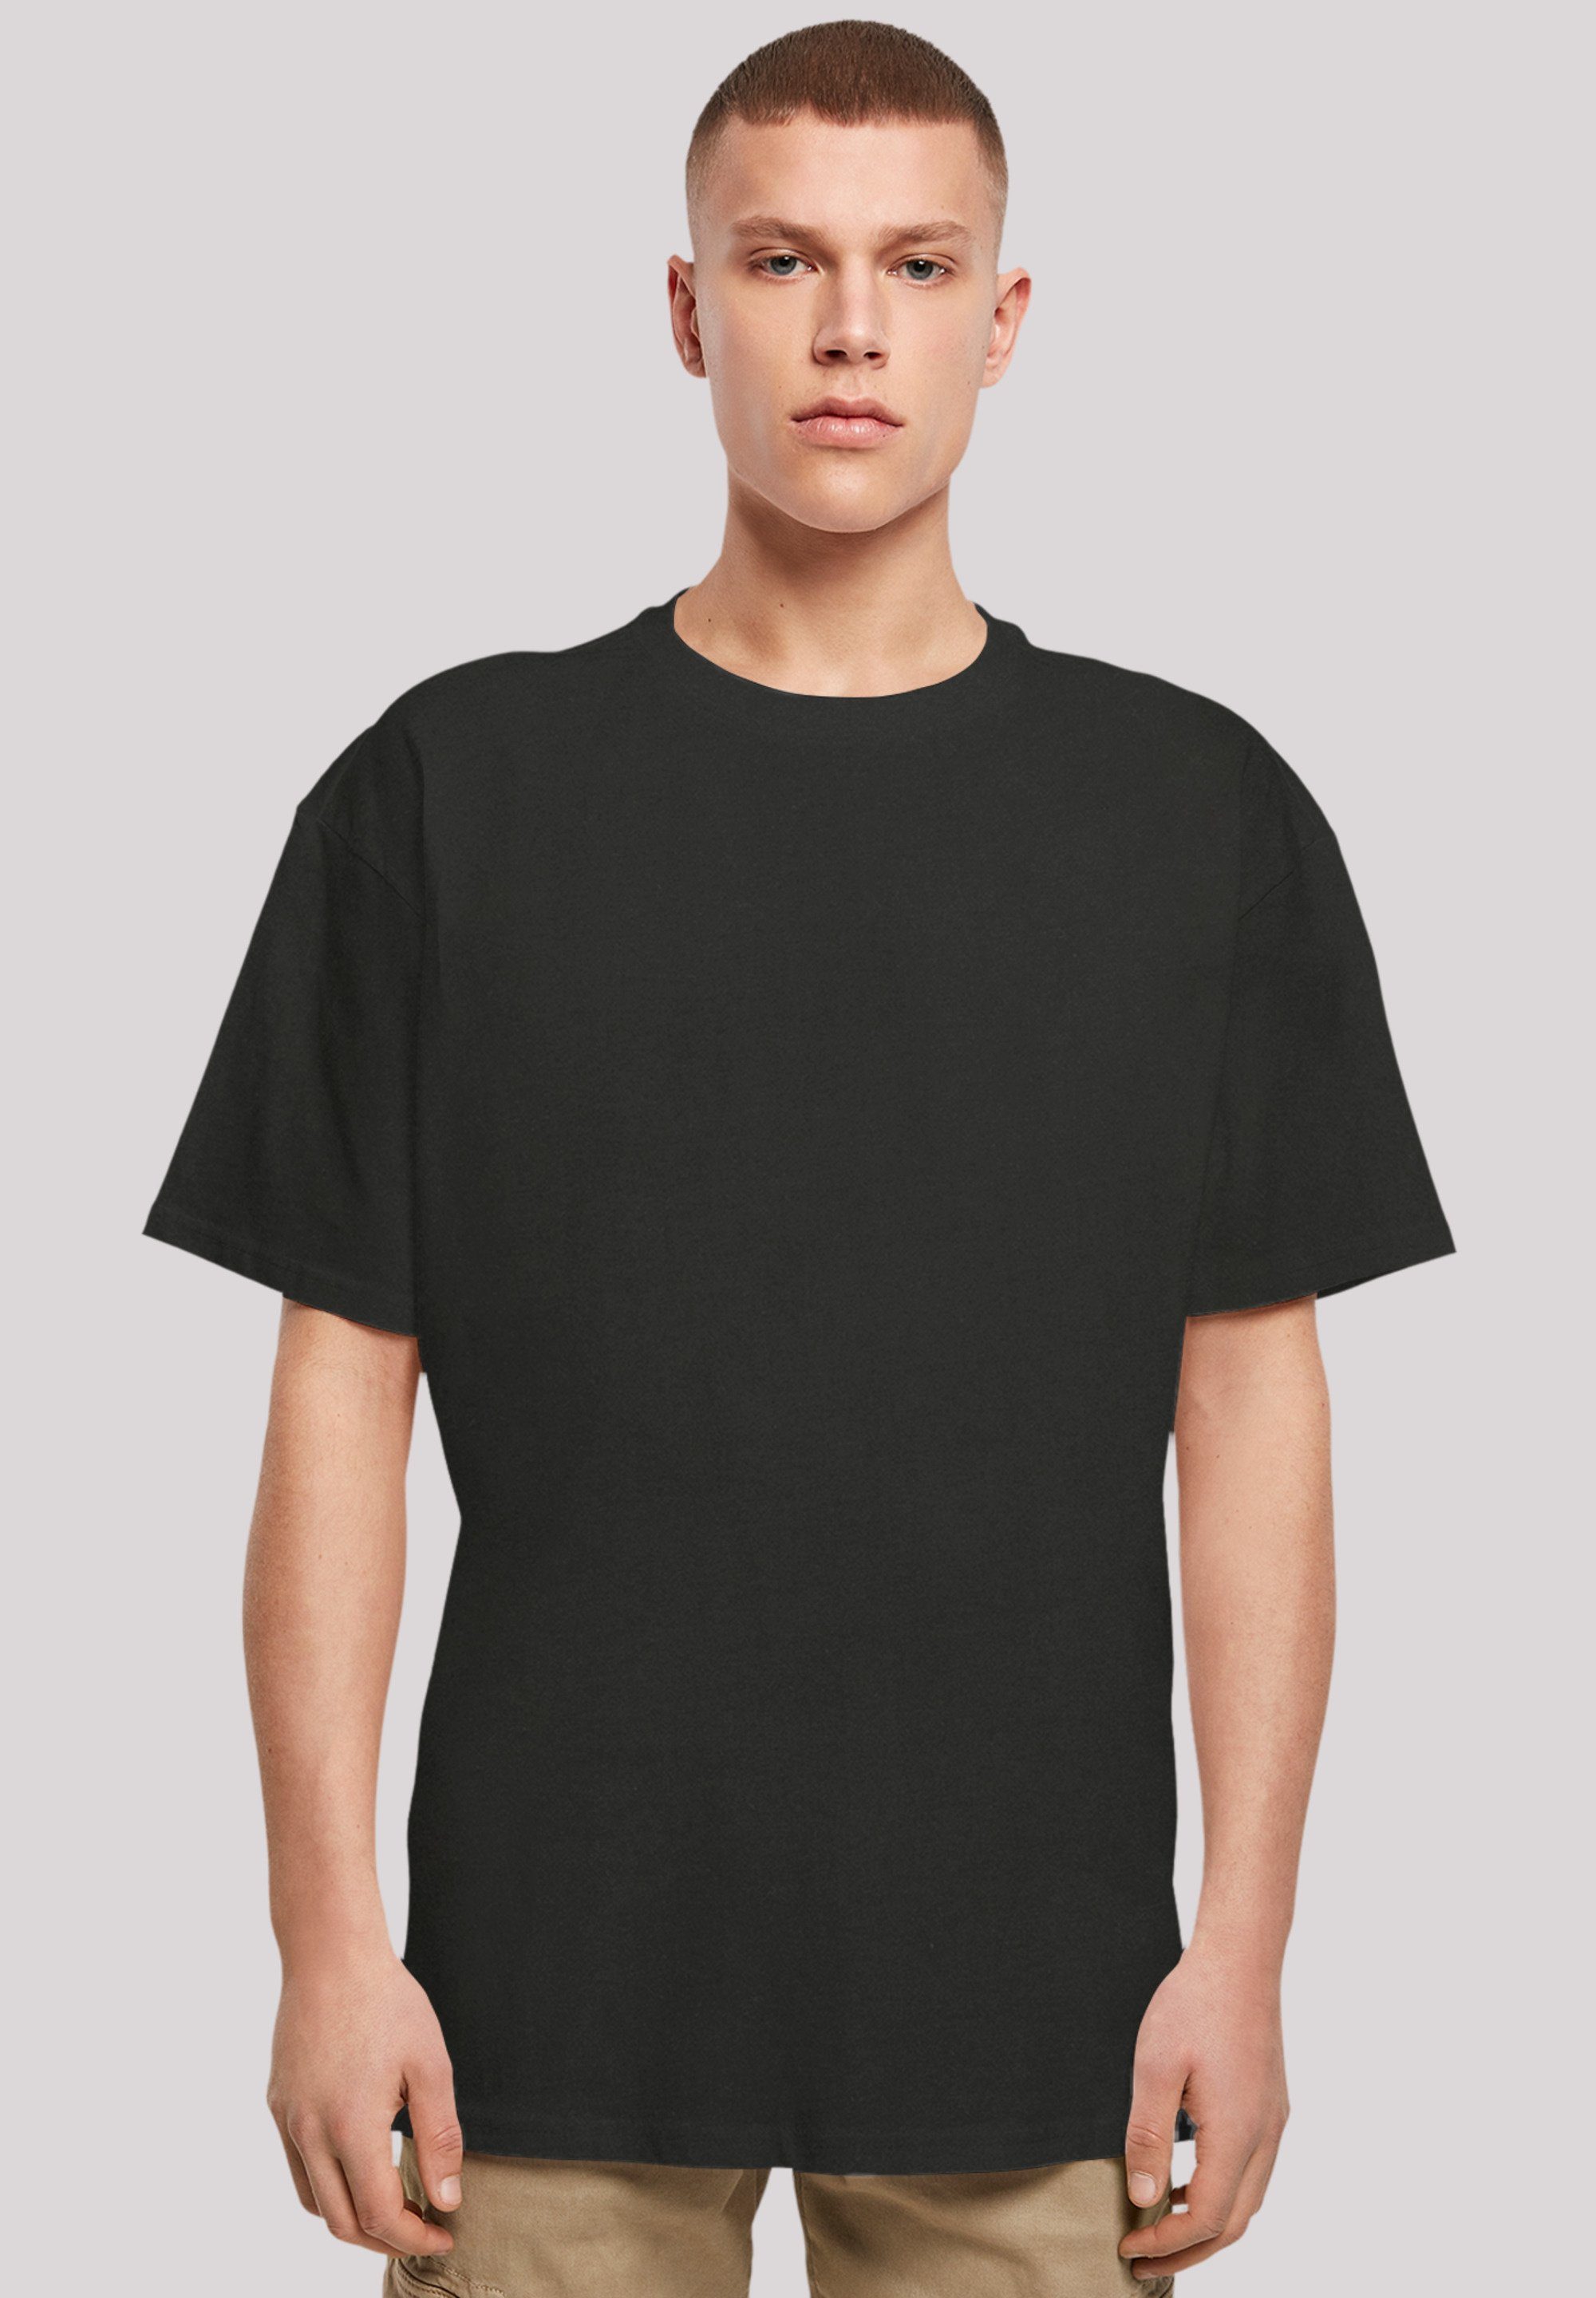 F4NT4STIC T-Shirt up schwarz Print Sunny side